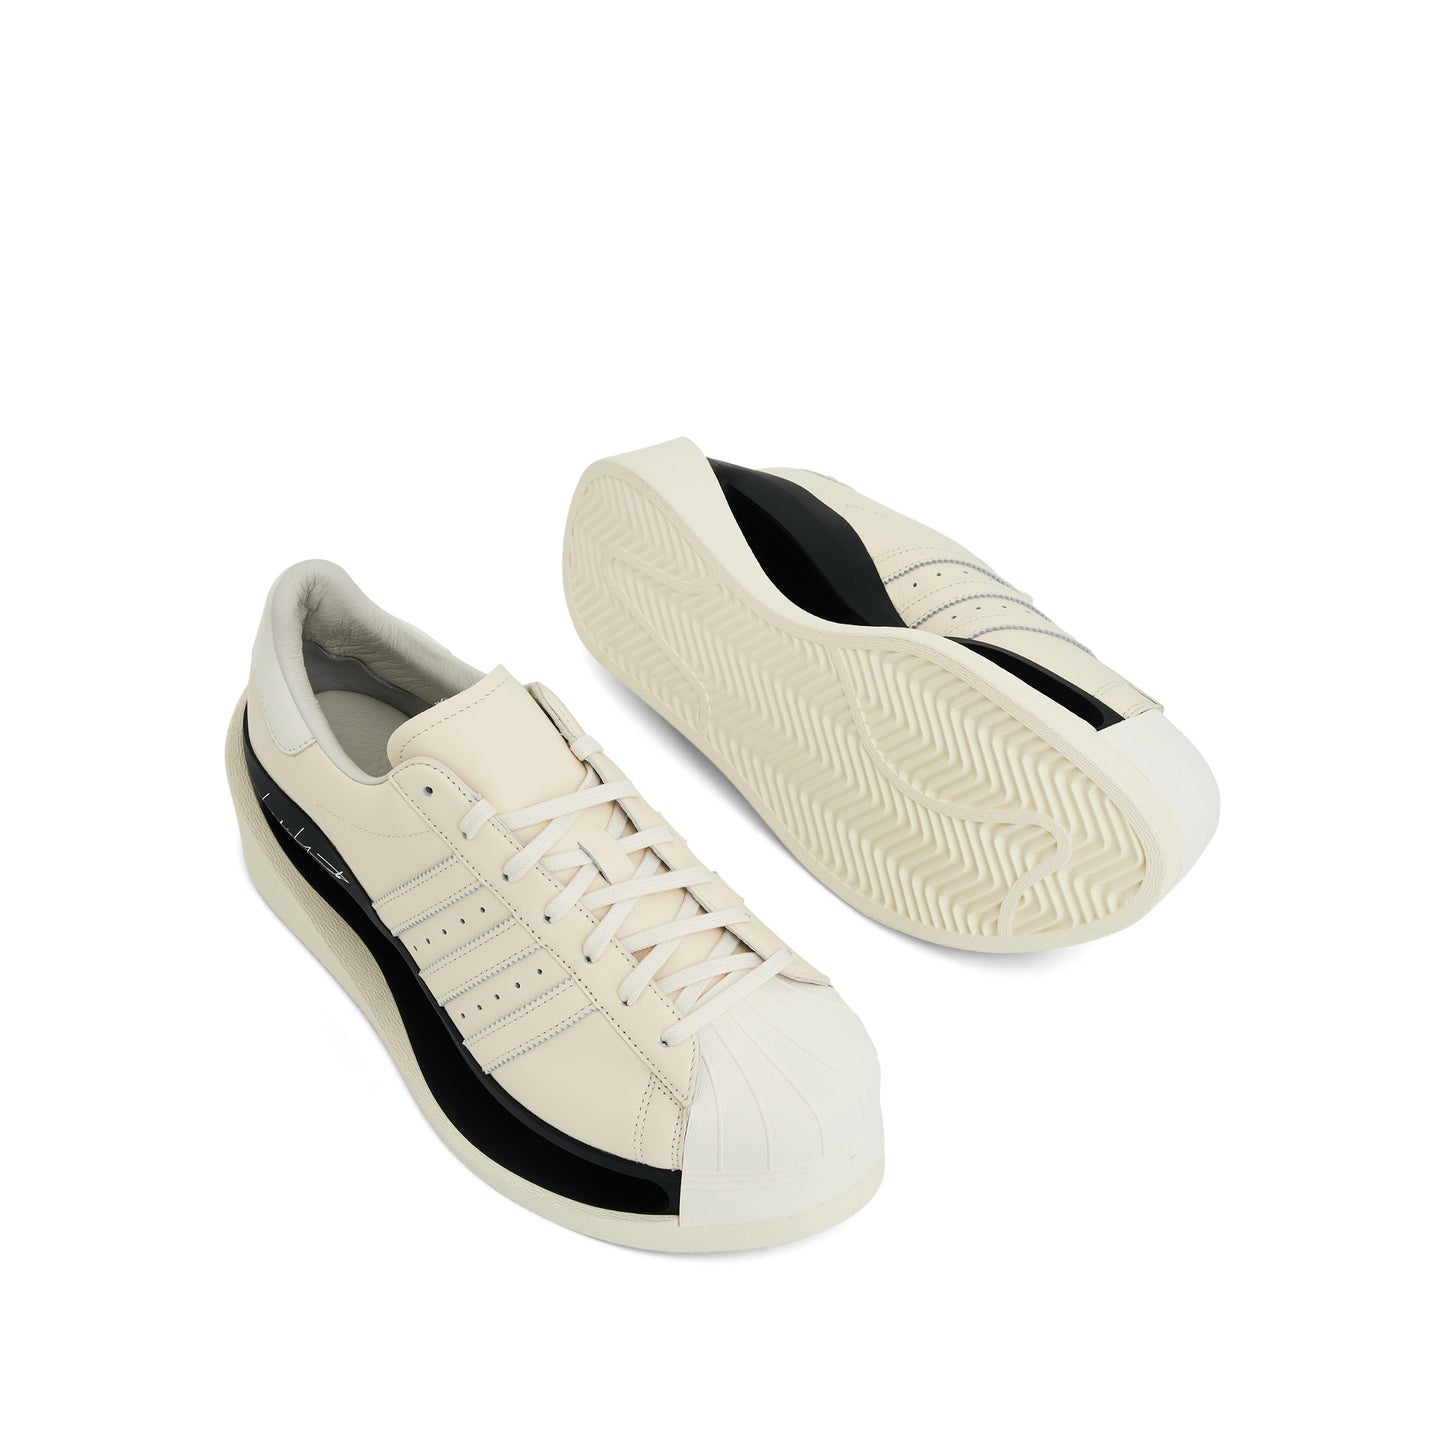 Gendo Superstar Sneaker in Cream White/Black